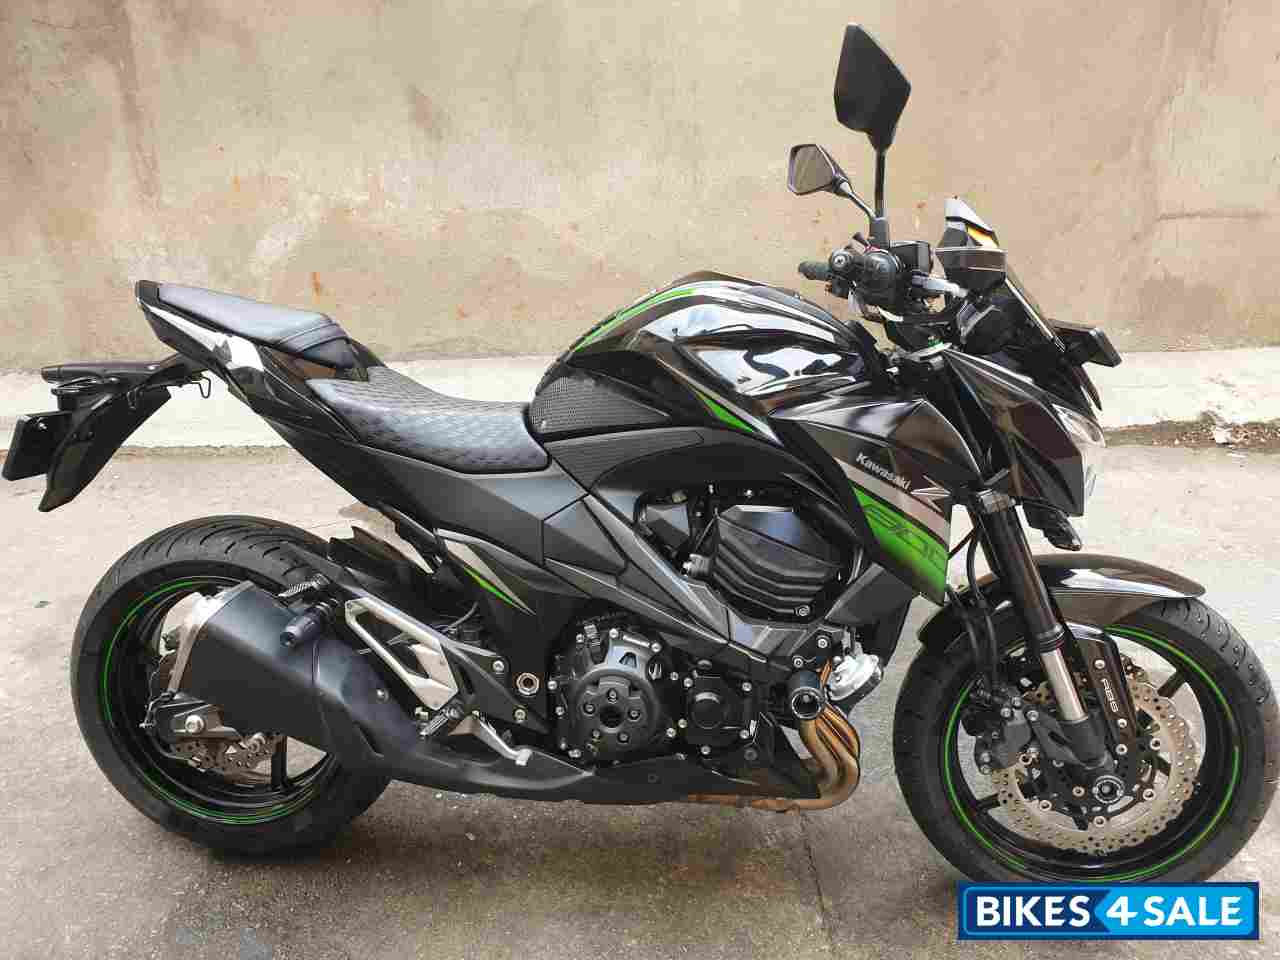 Used 2016 model Kawasaki Z800 for sale in Bangalore. ID 199299 - Bikes4Sale